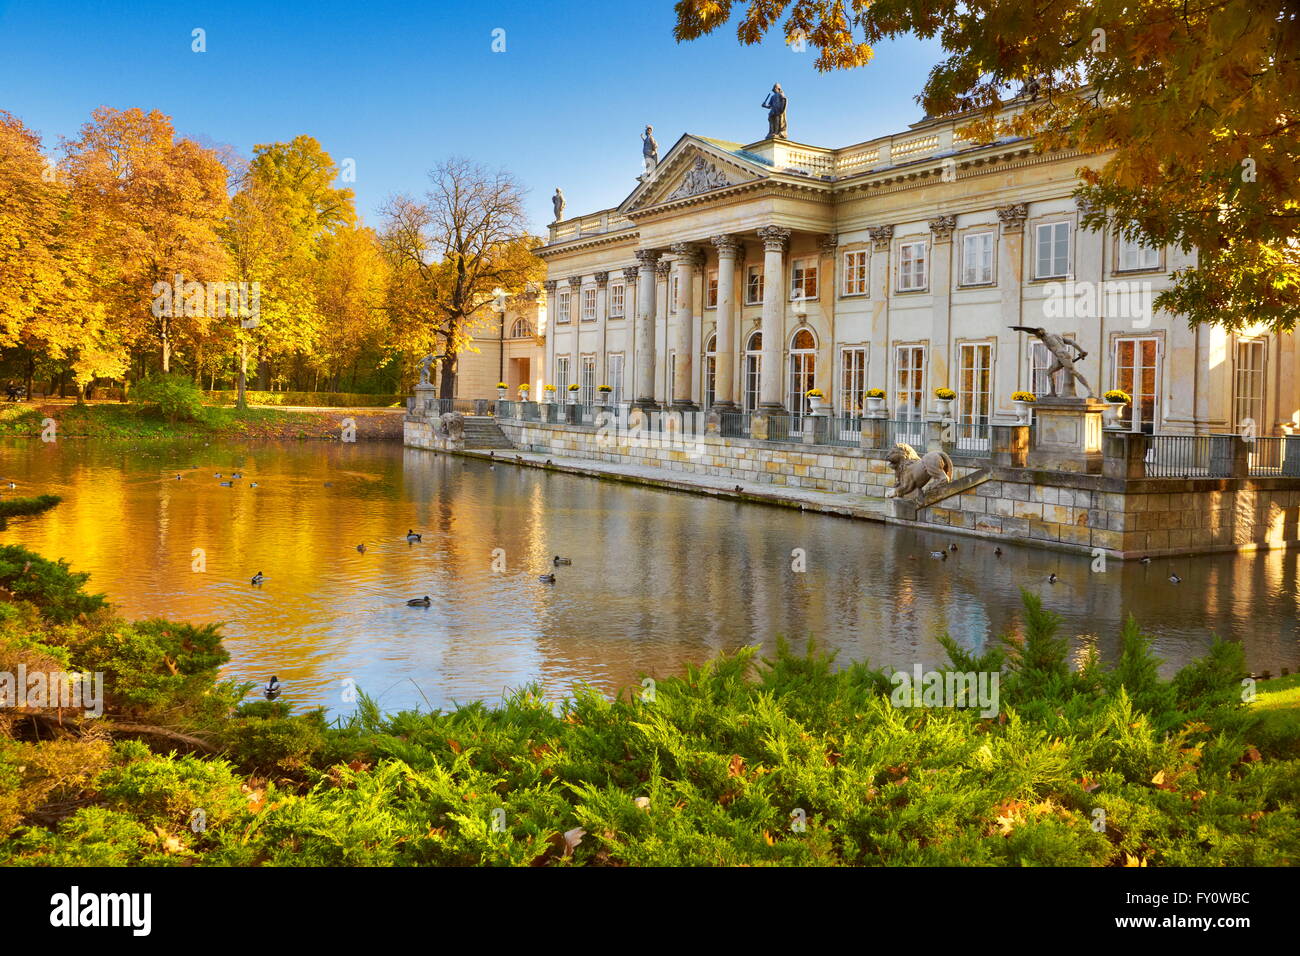 Royal Palace in Lazienki Park, Warsaw, Poland Stock Photo